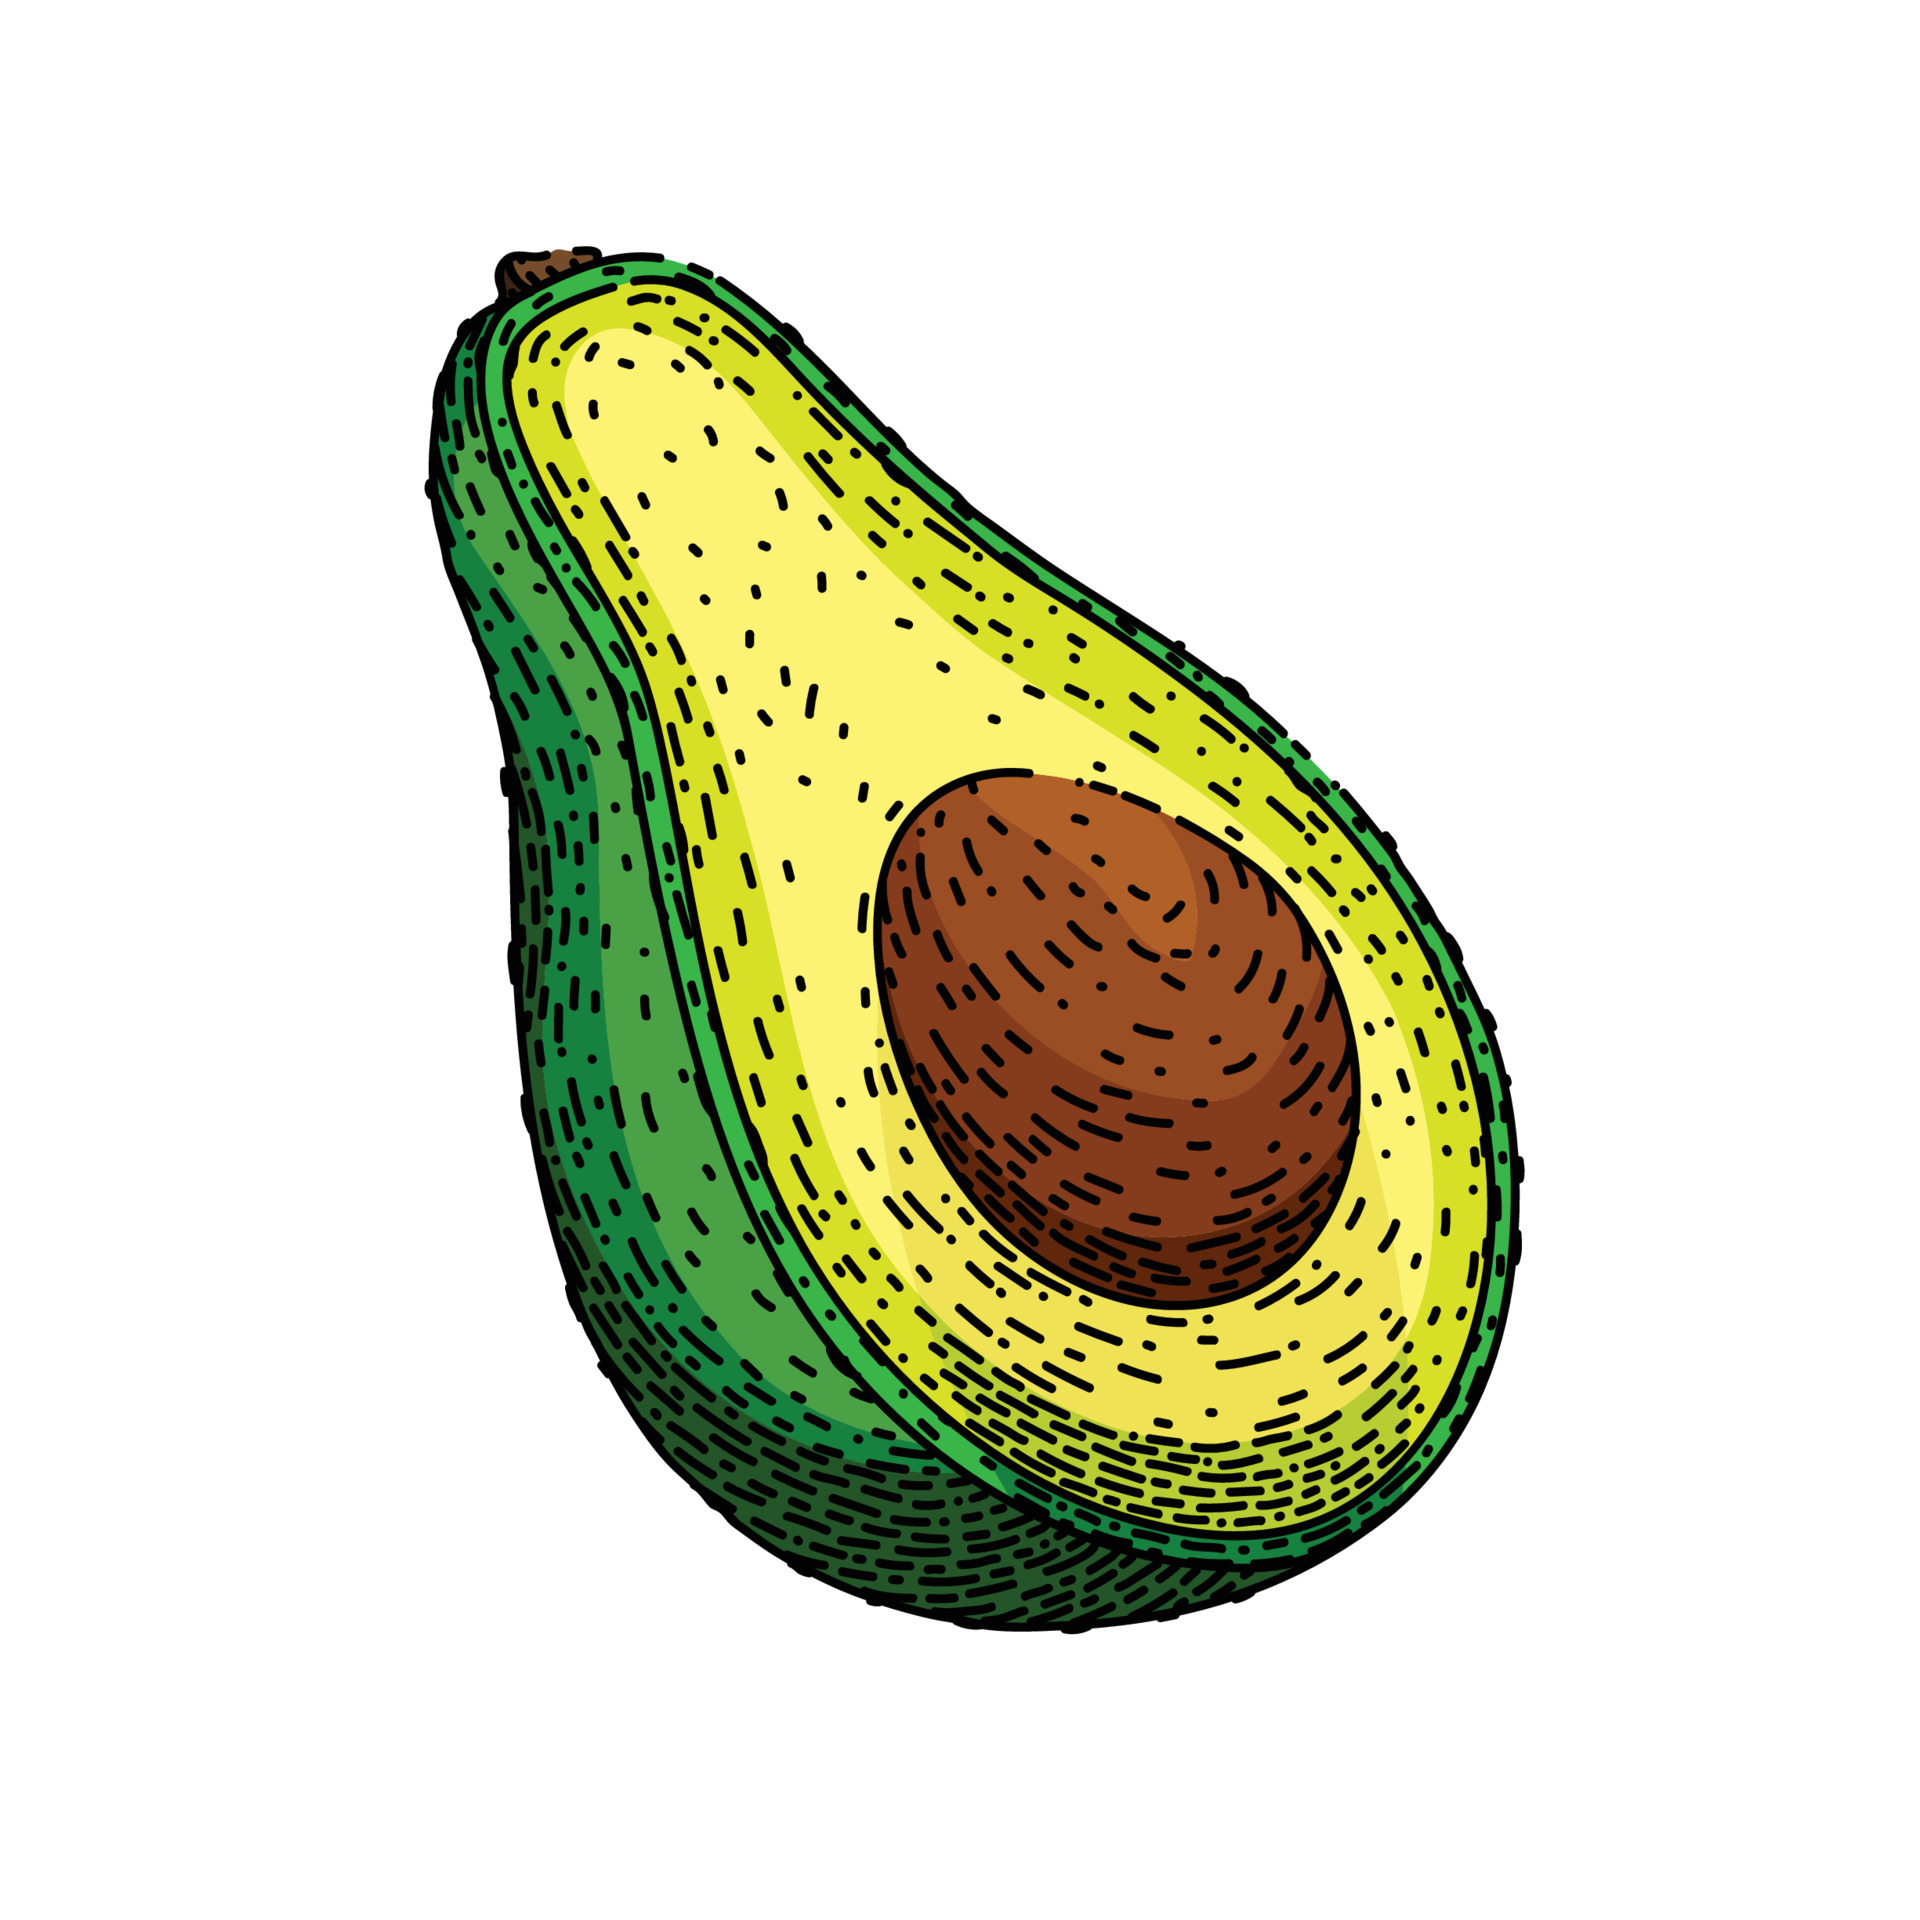 Premium Vector  Avocado set of handdrawn avocado in sketch style black  vector illustration isolated on white